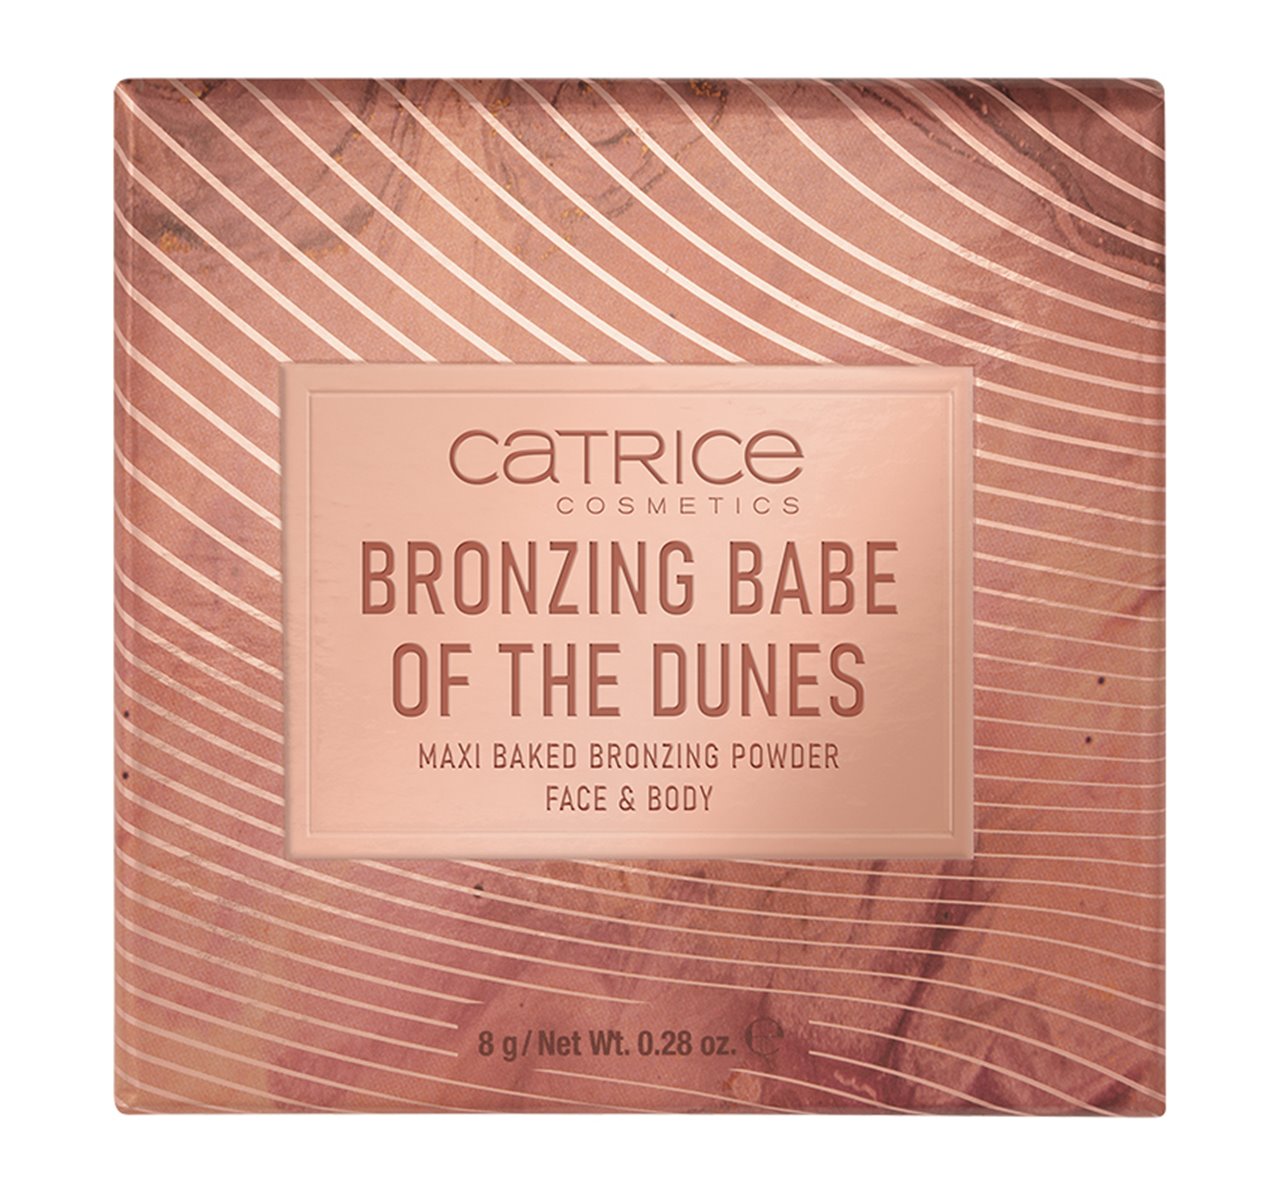 Babe Powder-Face Bronzing Maxi Dunes Bronzing The Catrice Baked Of